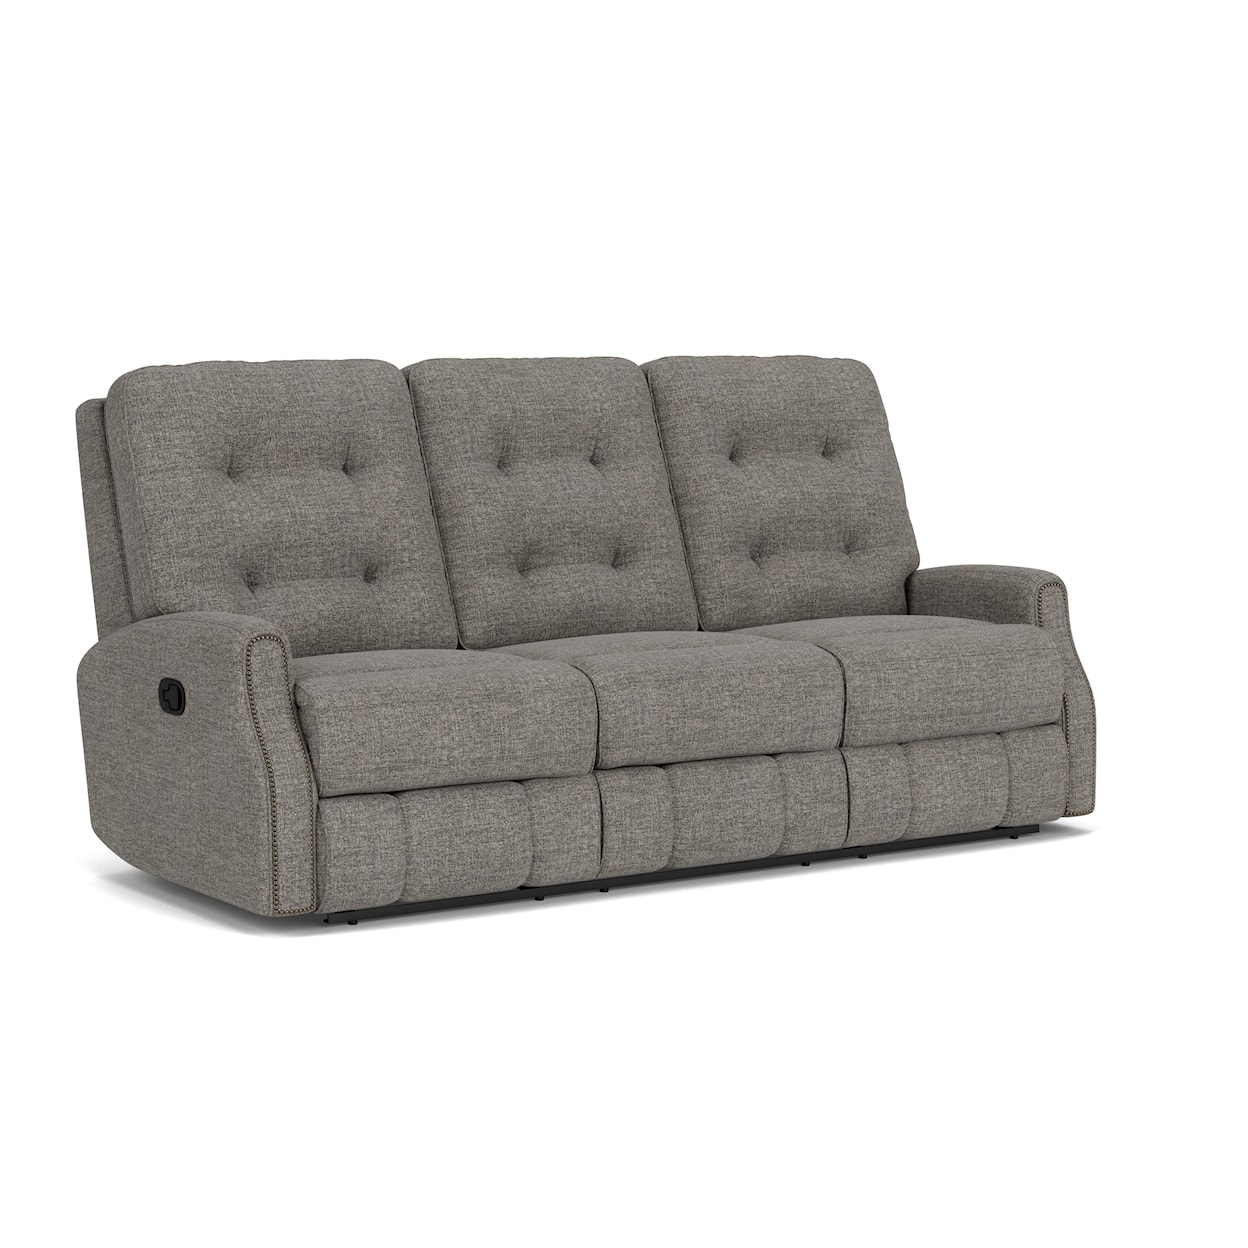 Flexsteel Devon Reclining Sofa